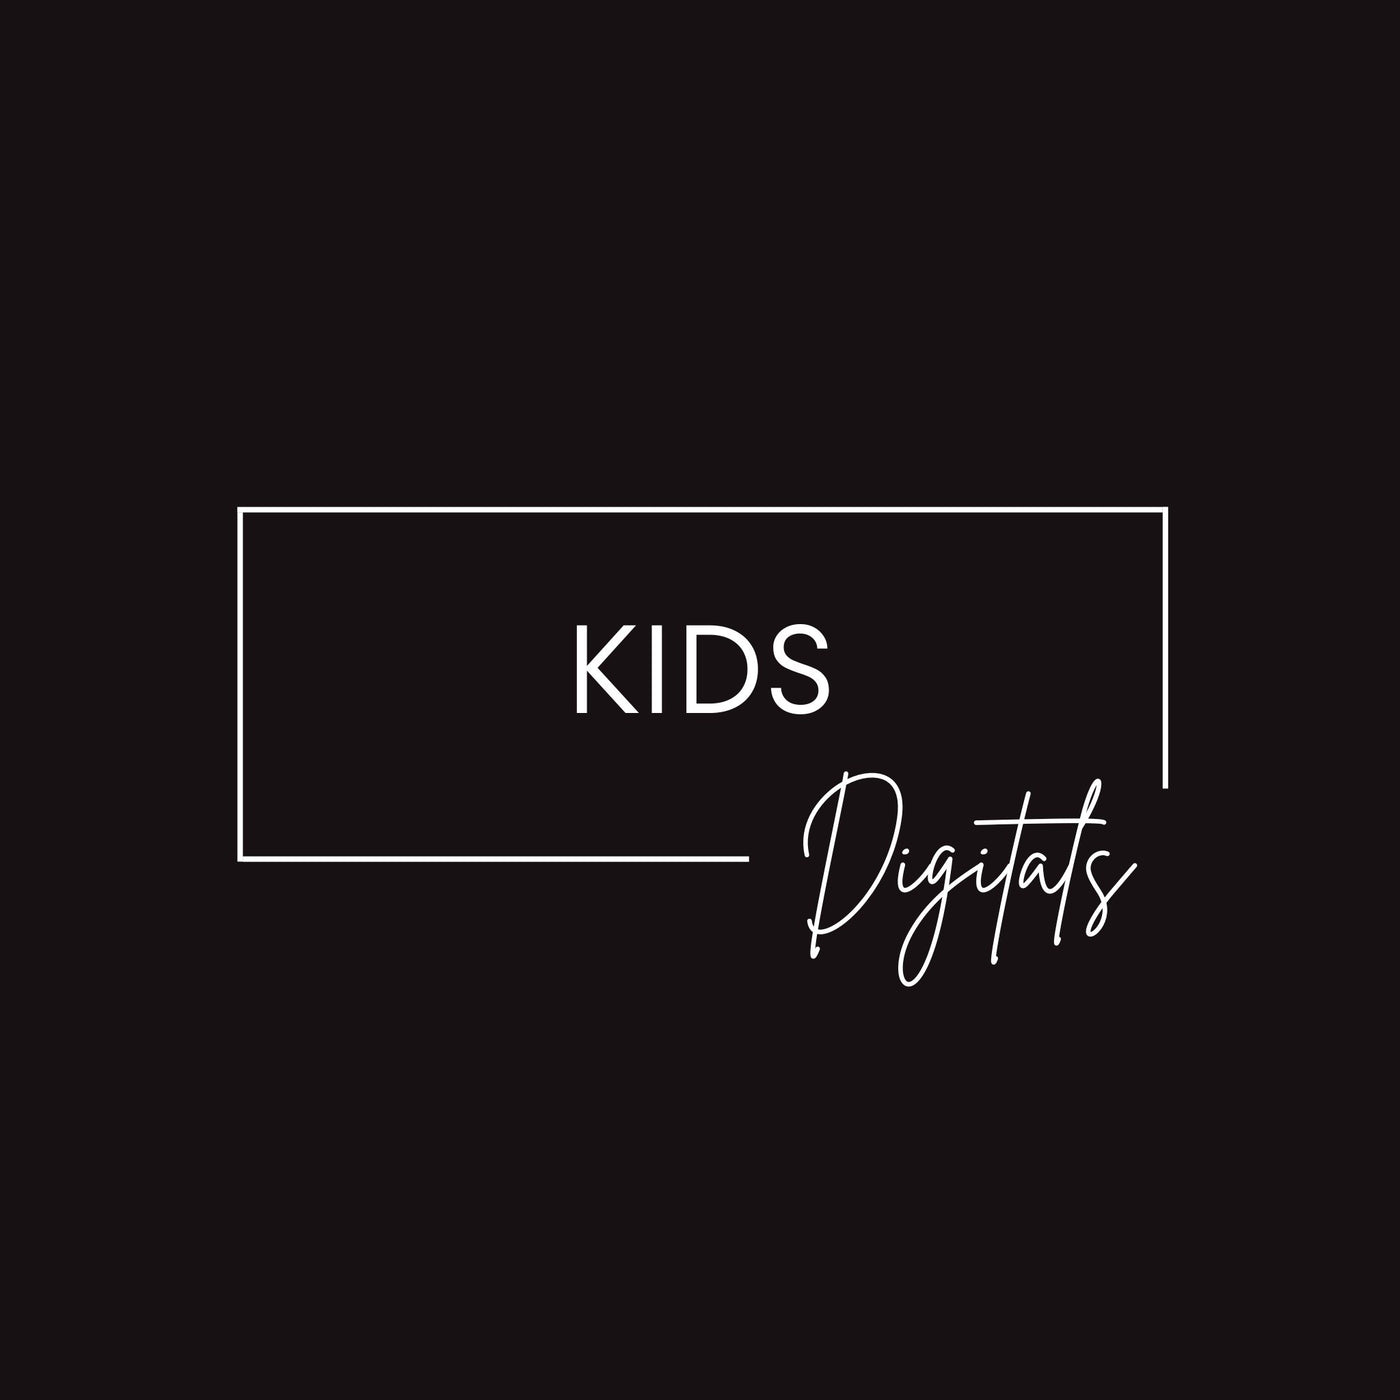 Kids (Digital Files)